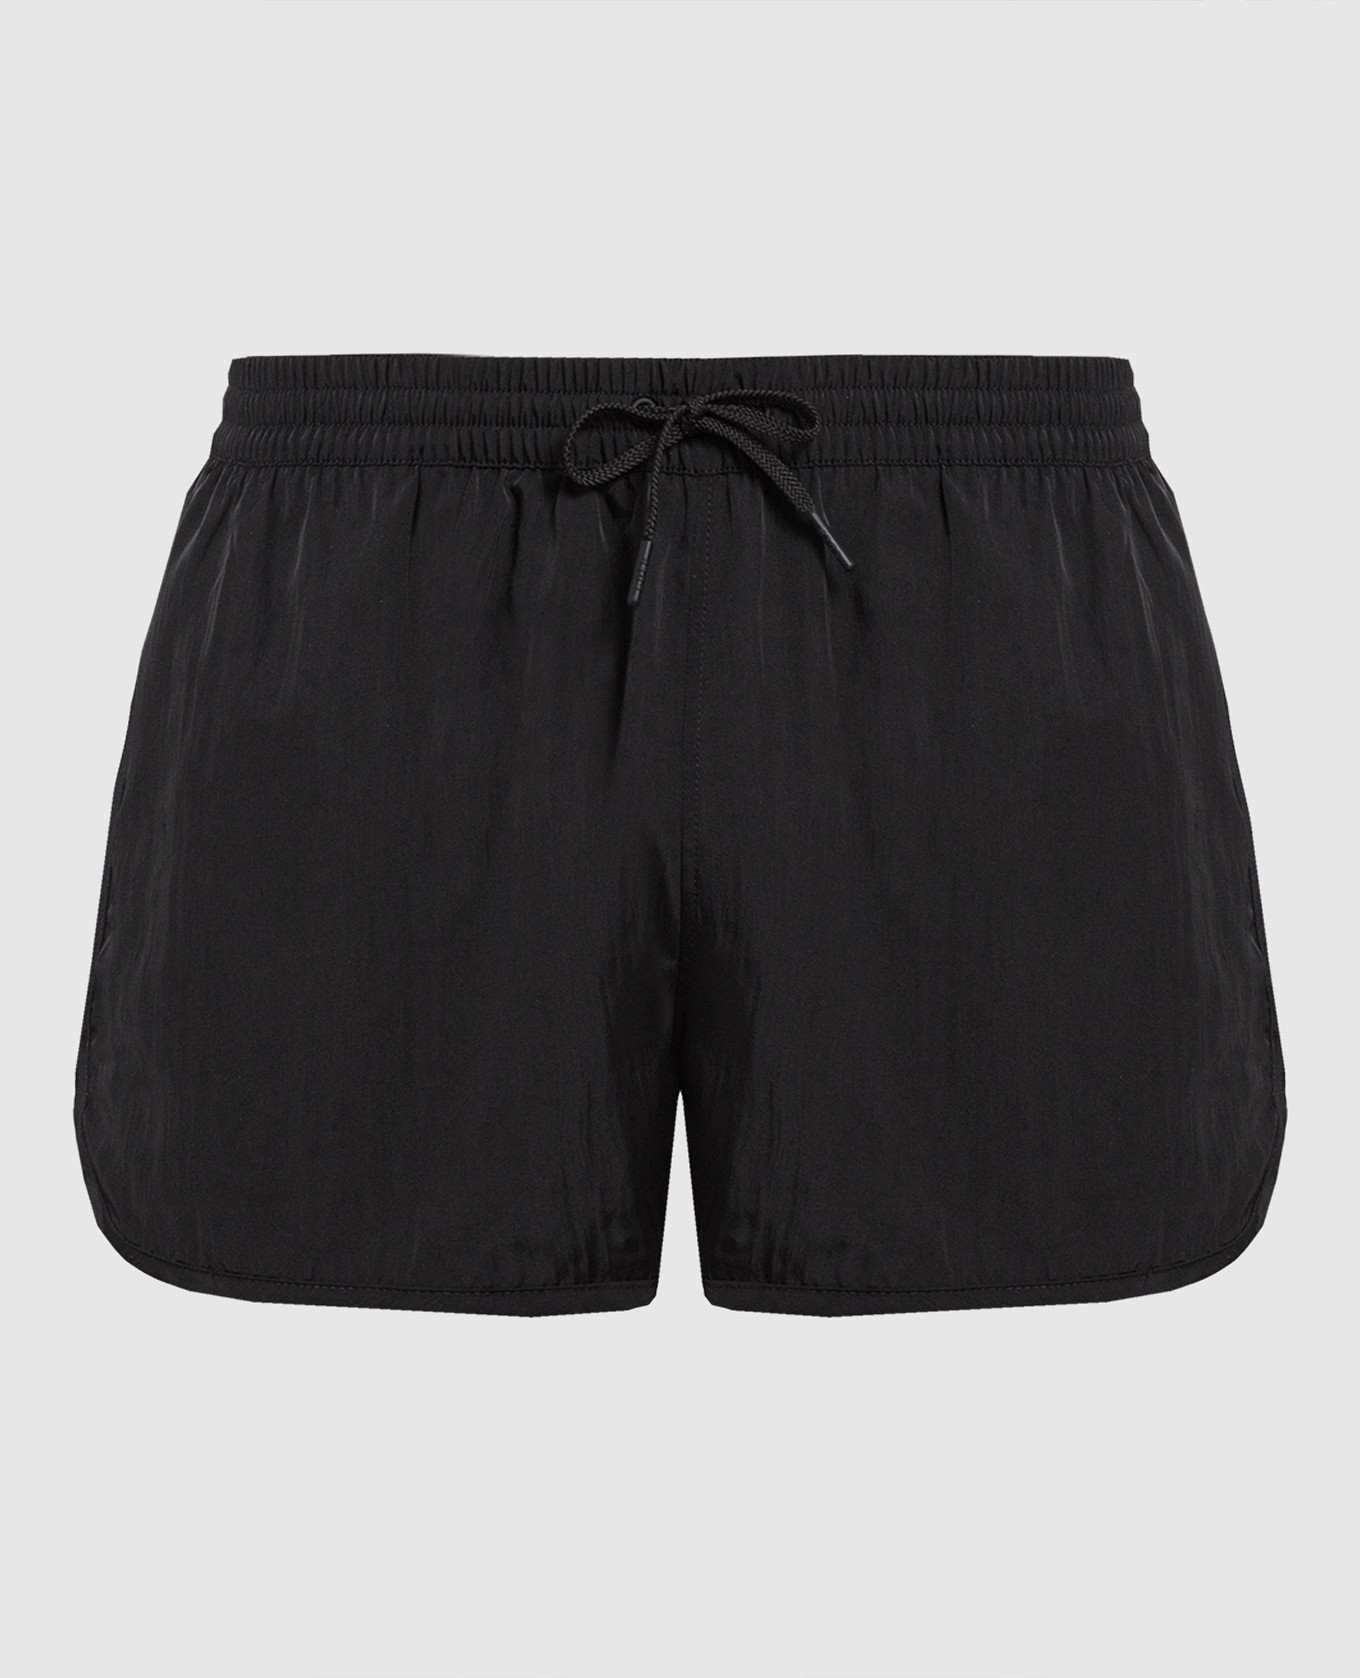 Black swimming shorts